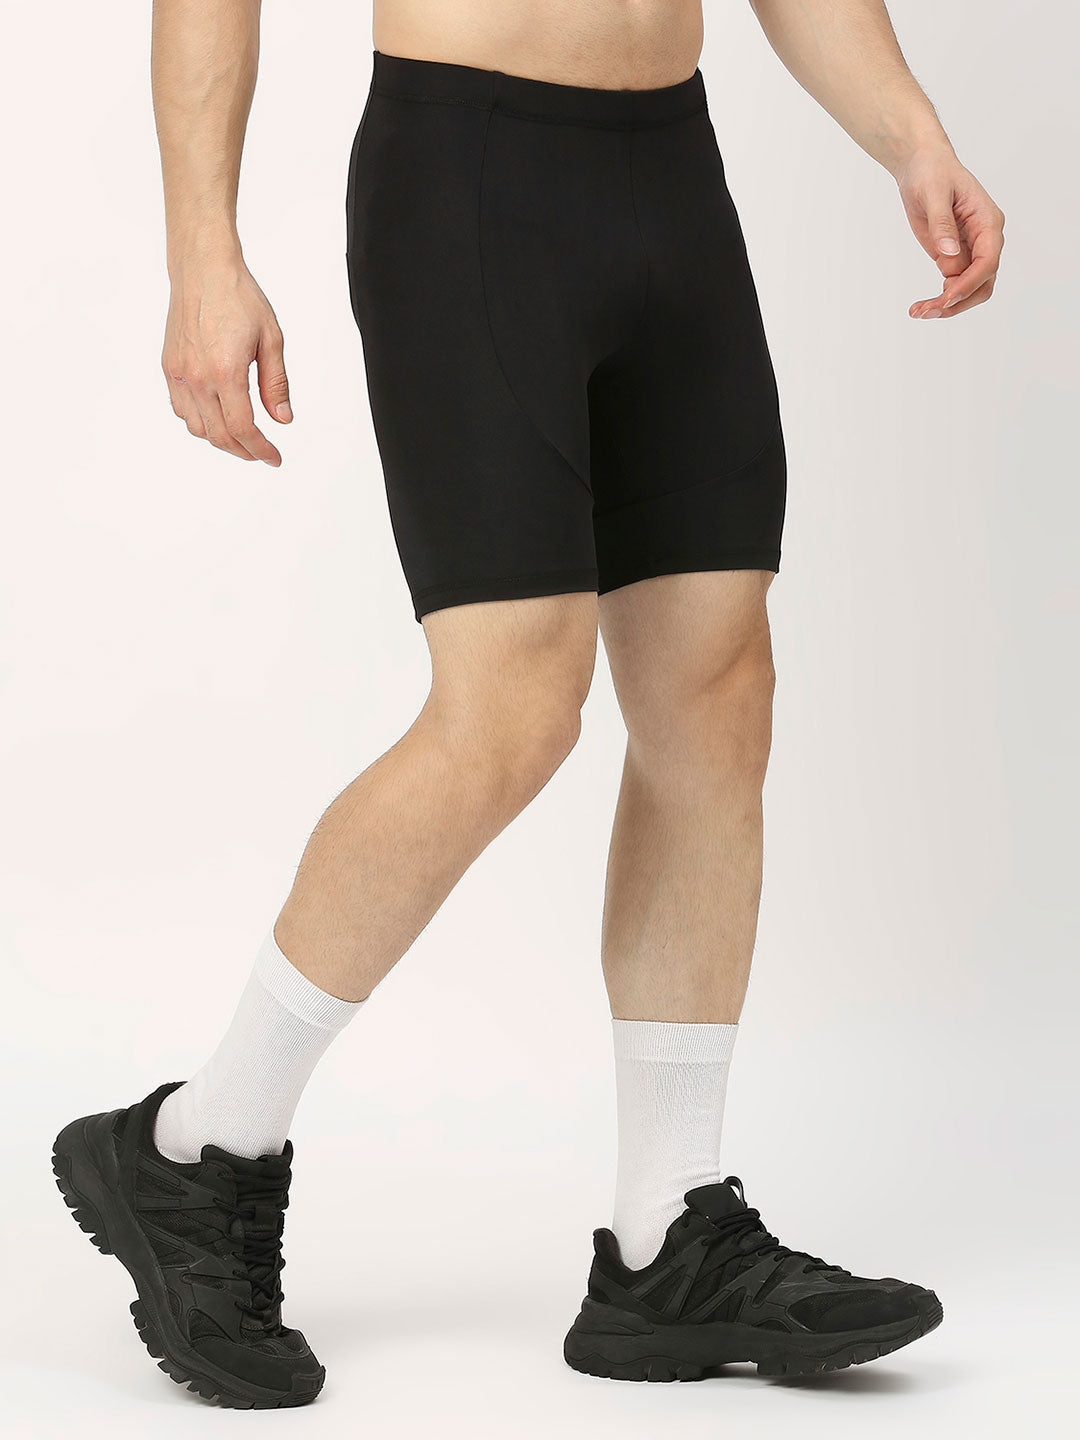 Shop Men's Black Compression Shorts - Optimal Support and